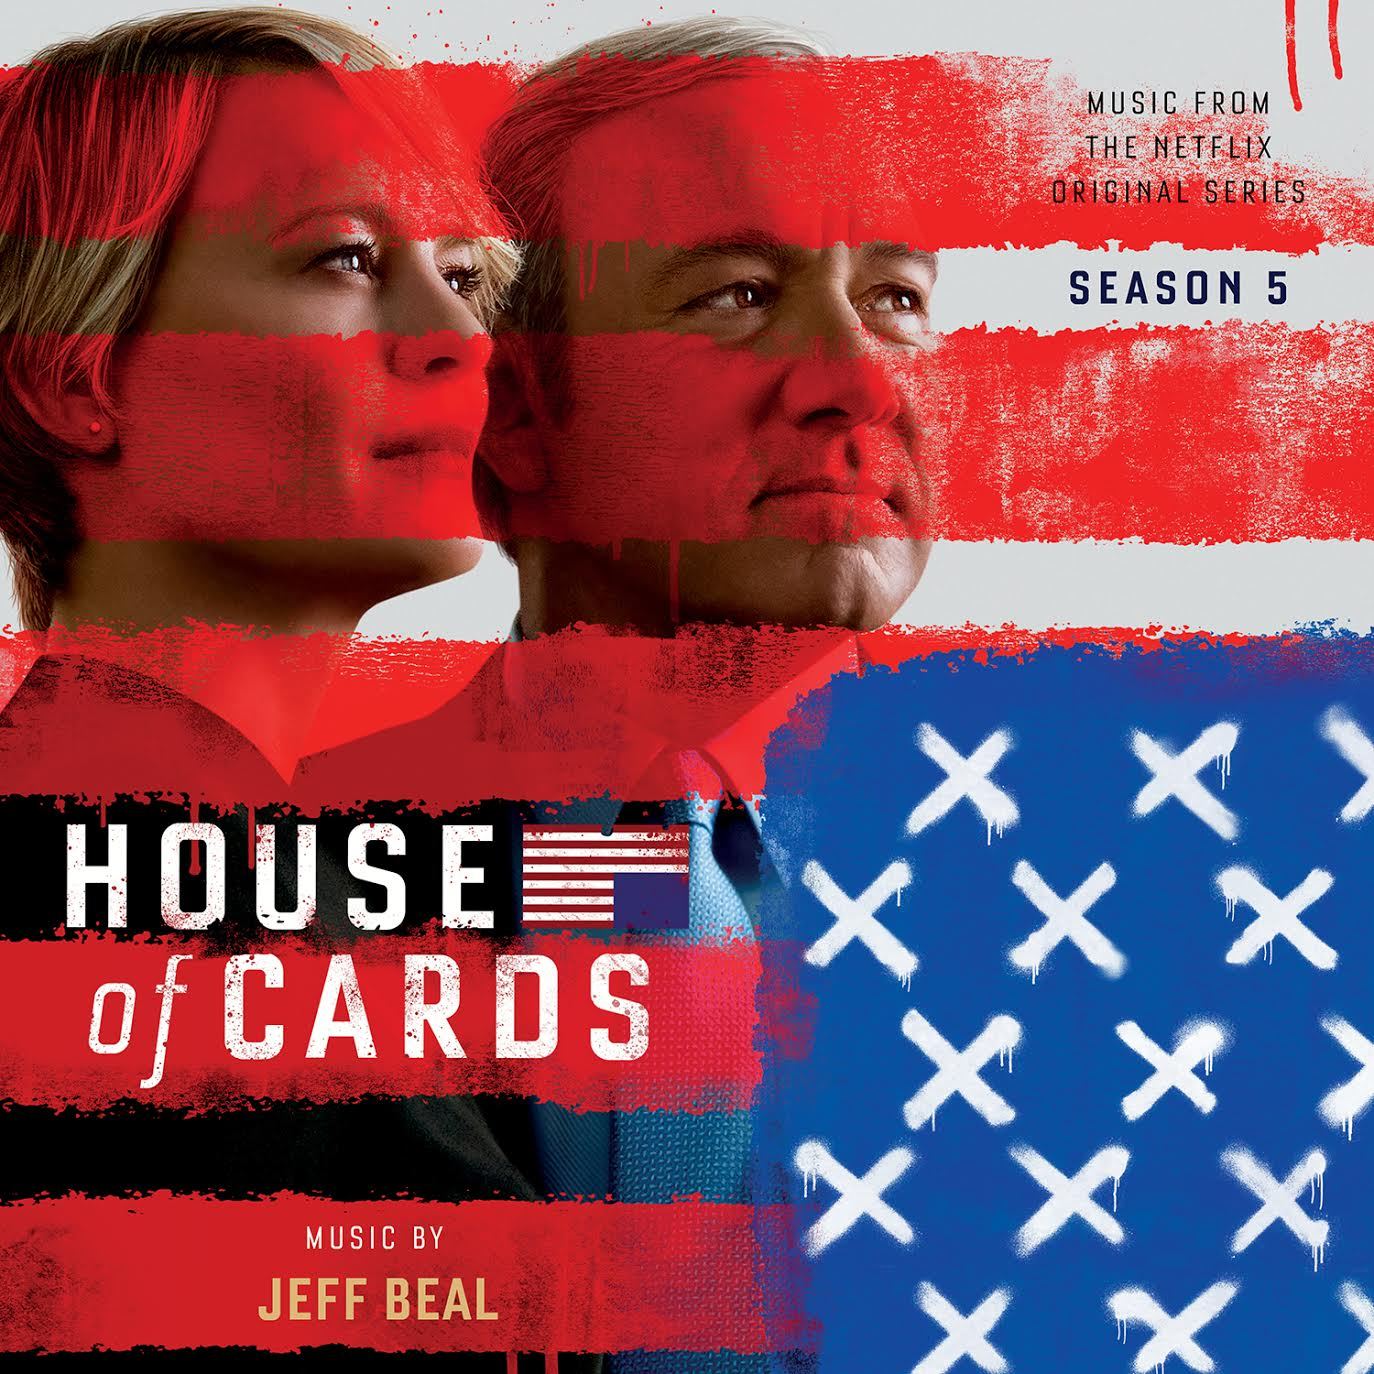 House of Cards Season 5 soundtrack